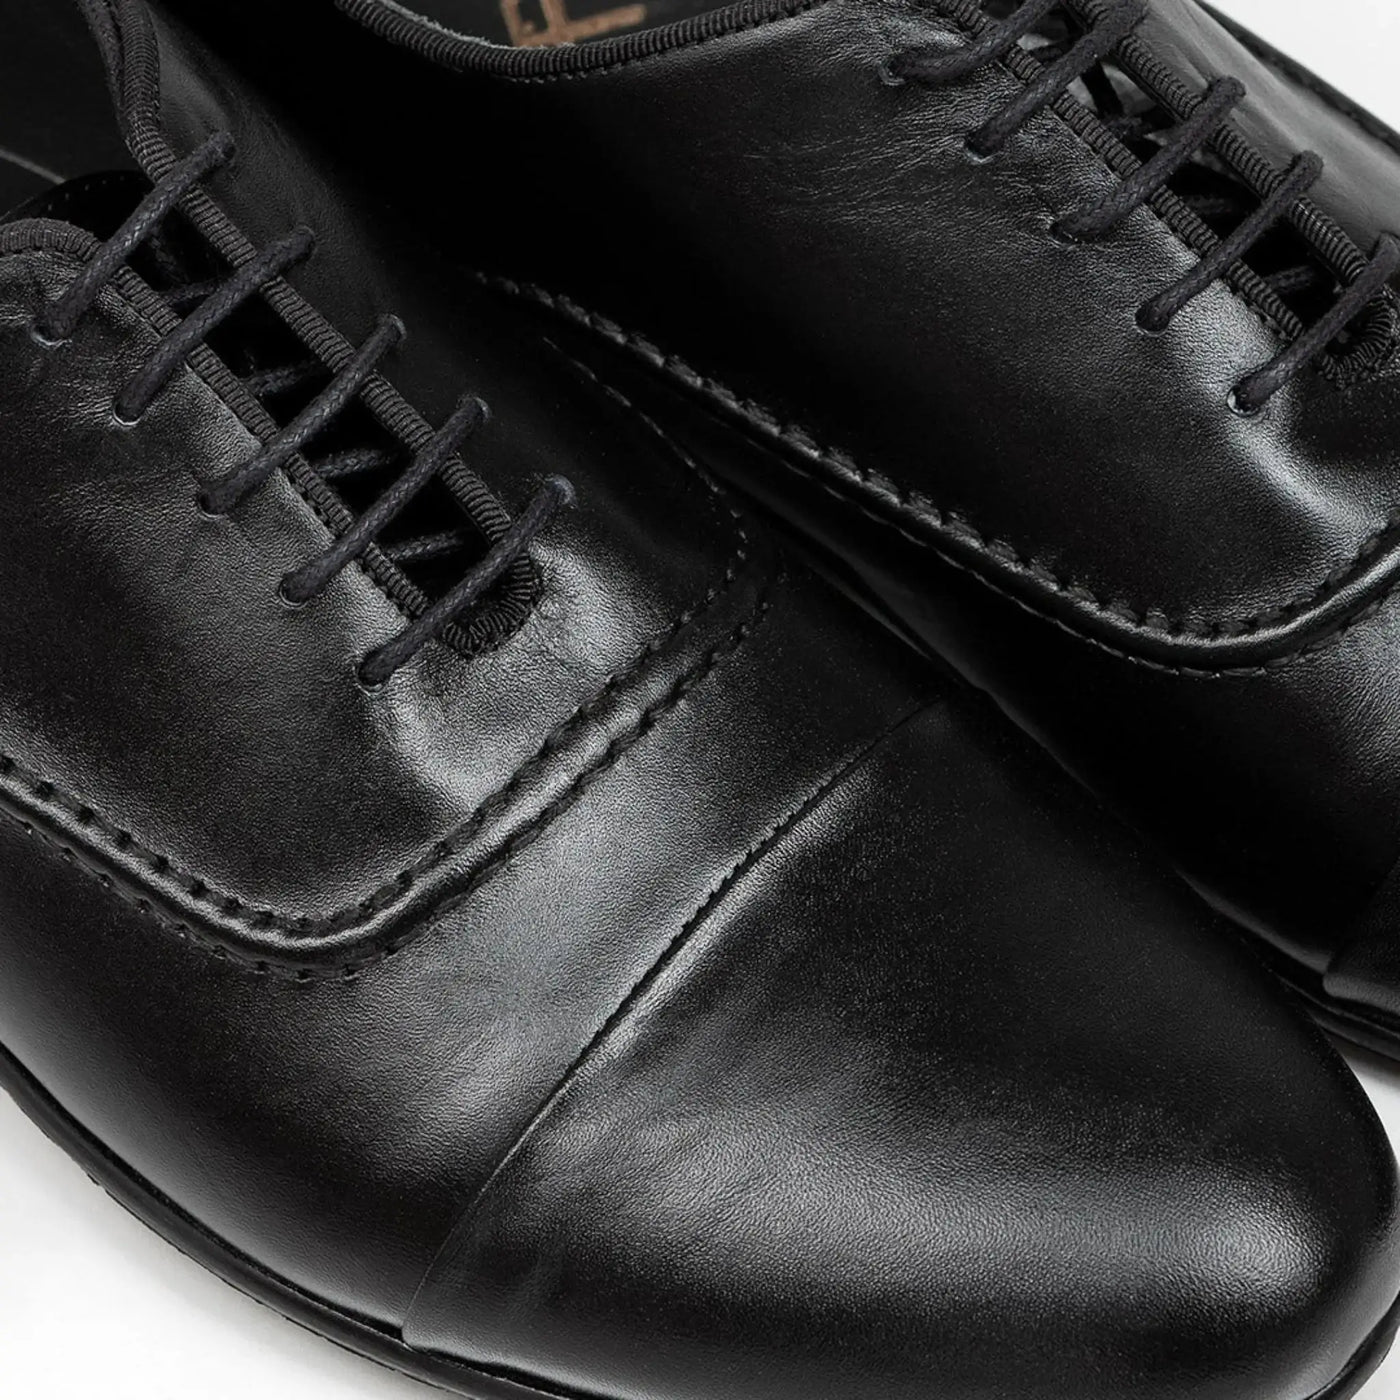 Lodevole Mens Oxford Shoes Black Close Up View